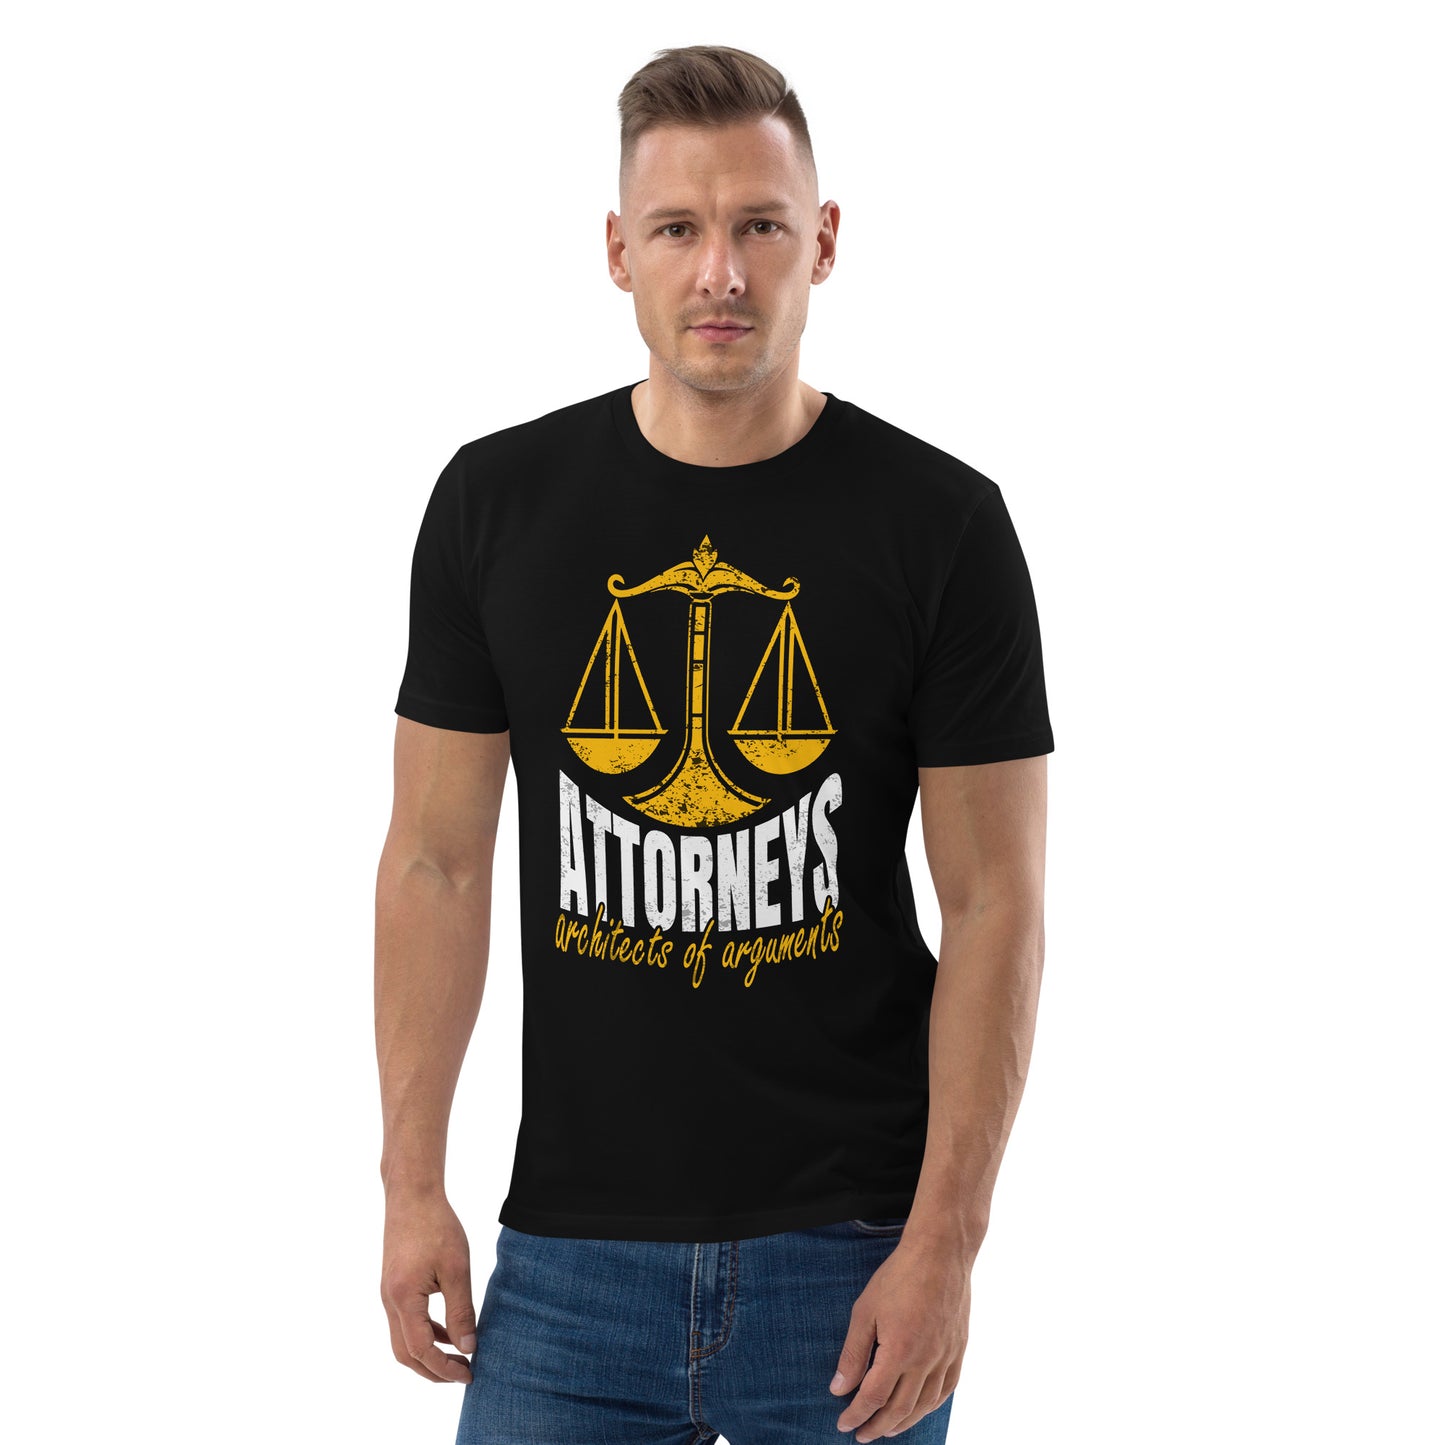 Attorneys architects of arguments Bio-Baumwoll-T-Shirt